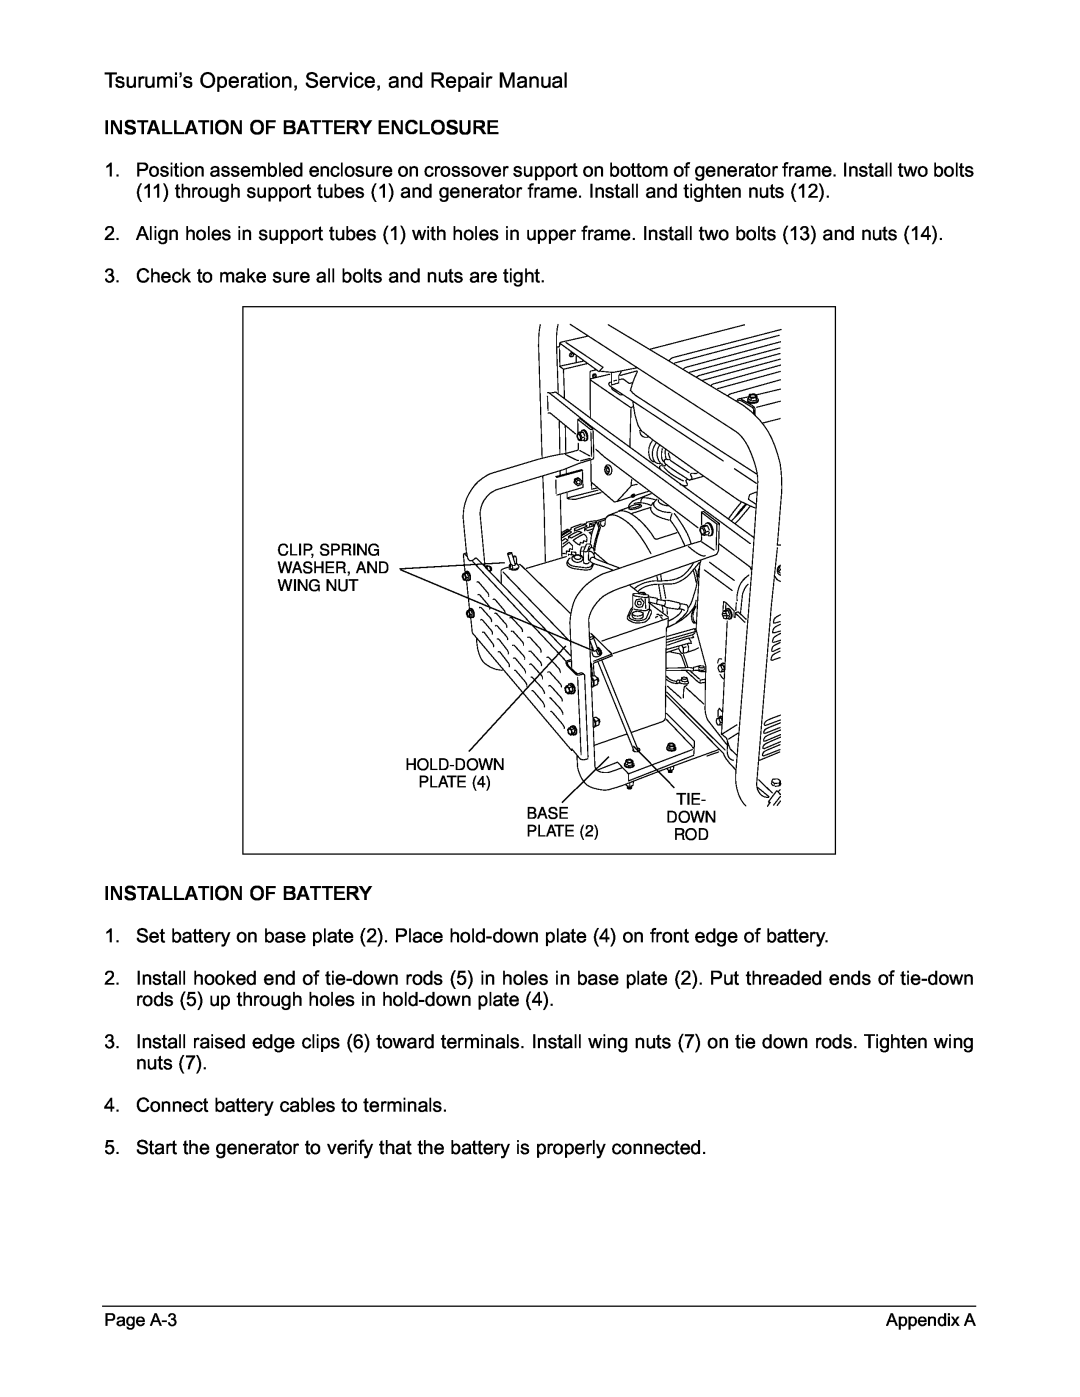 Honda Power Equipment TPG-6000H-DX Tsurumi’s Operation, Service, and Repair Manual, Installation Of Battery Enclosure 